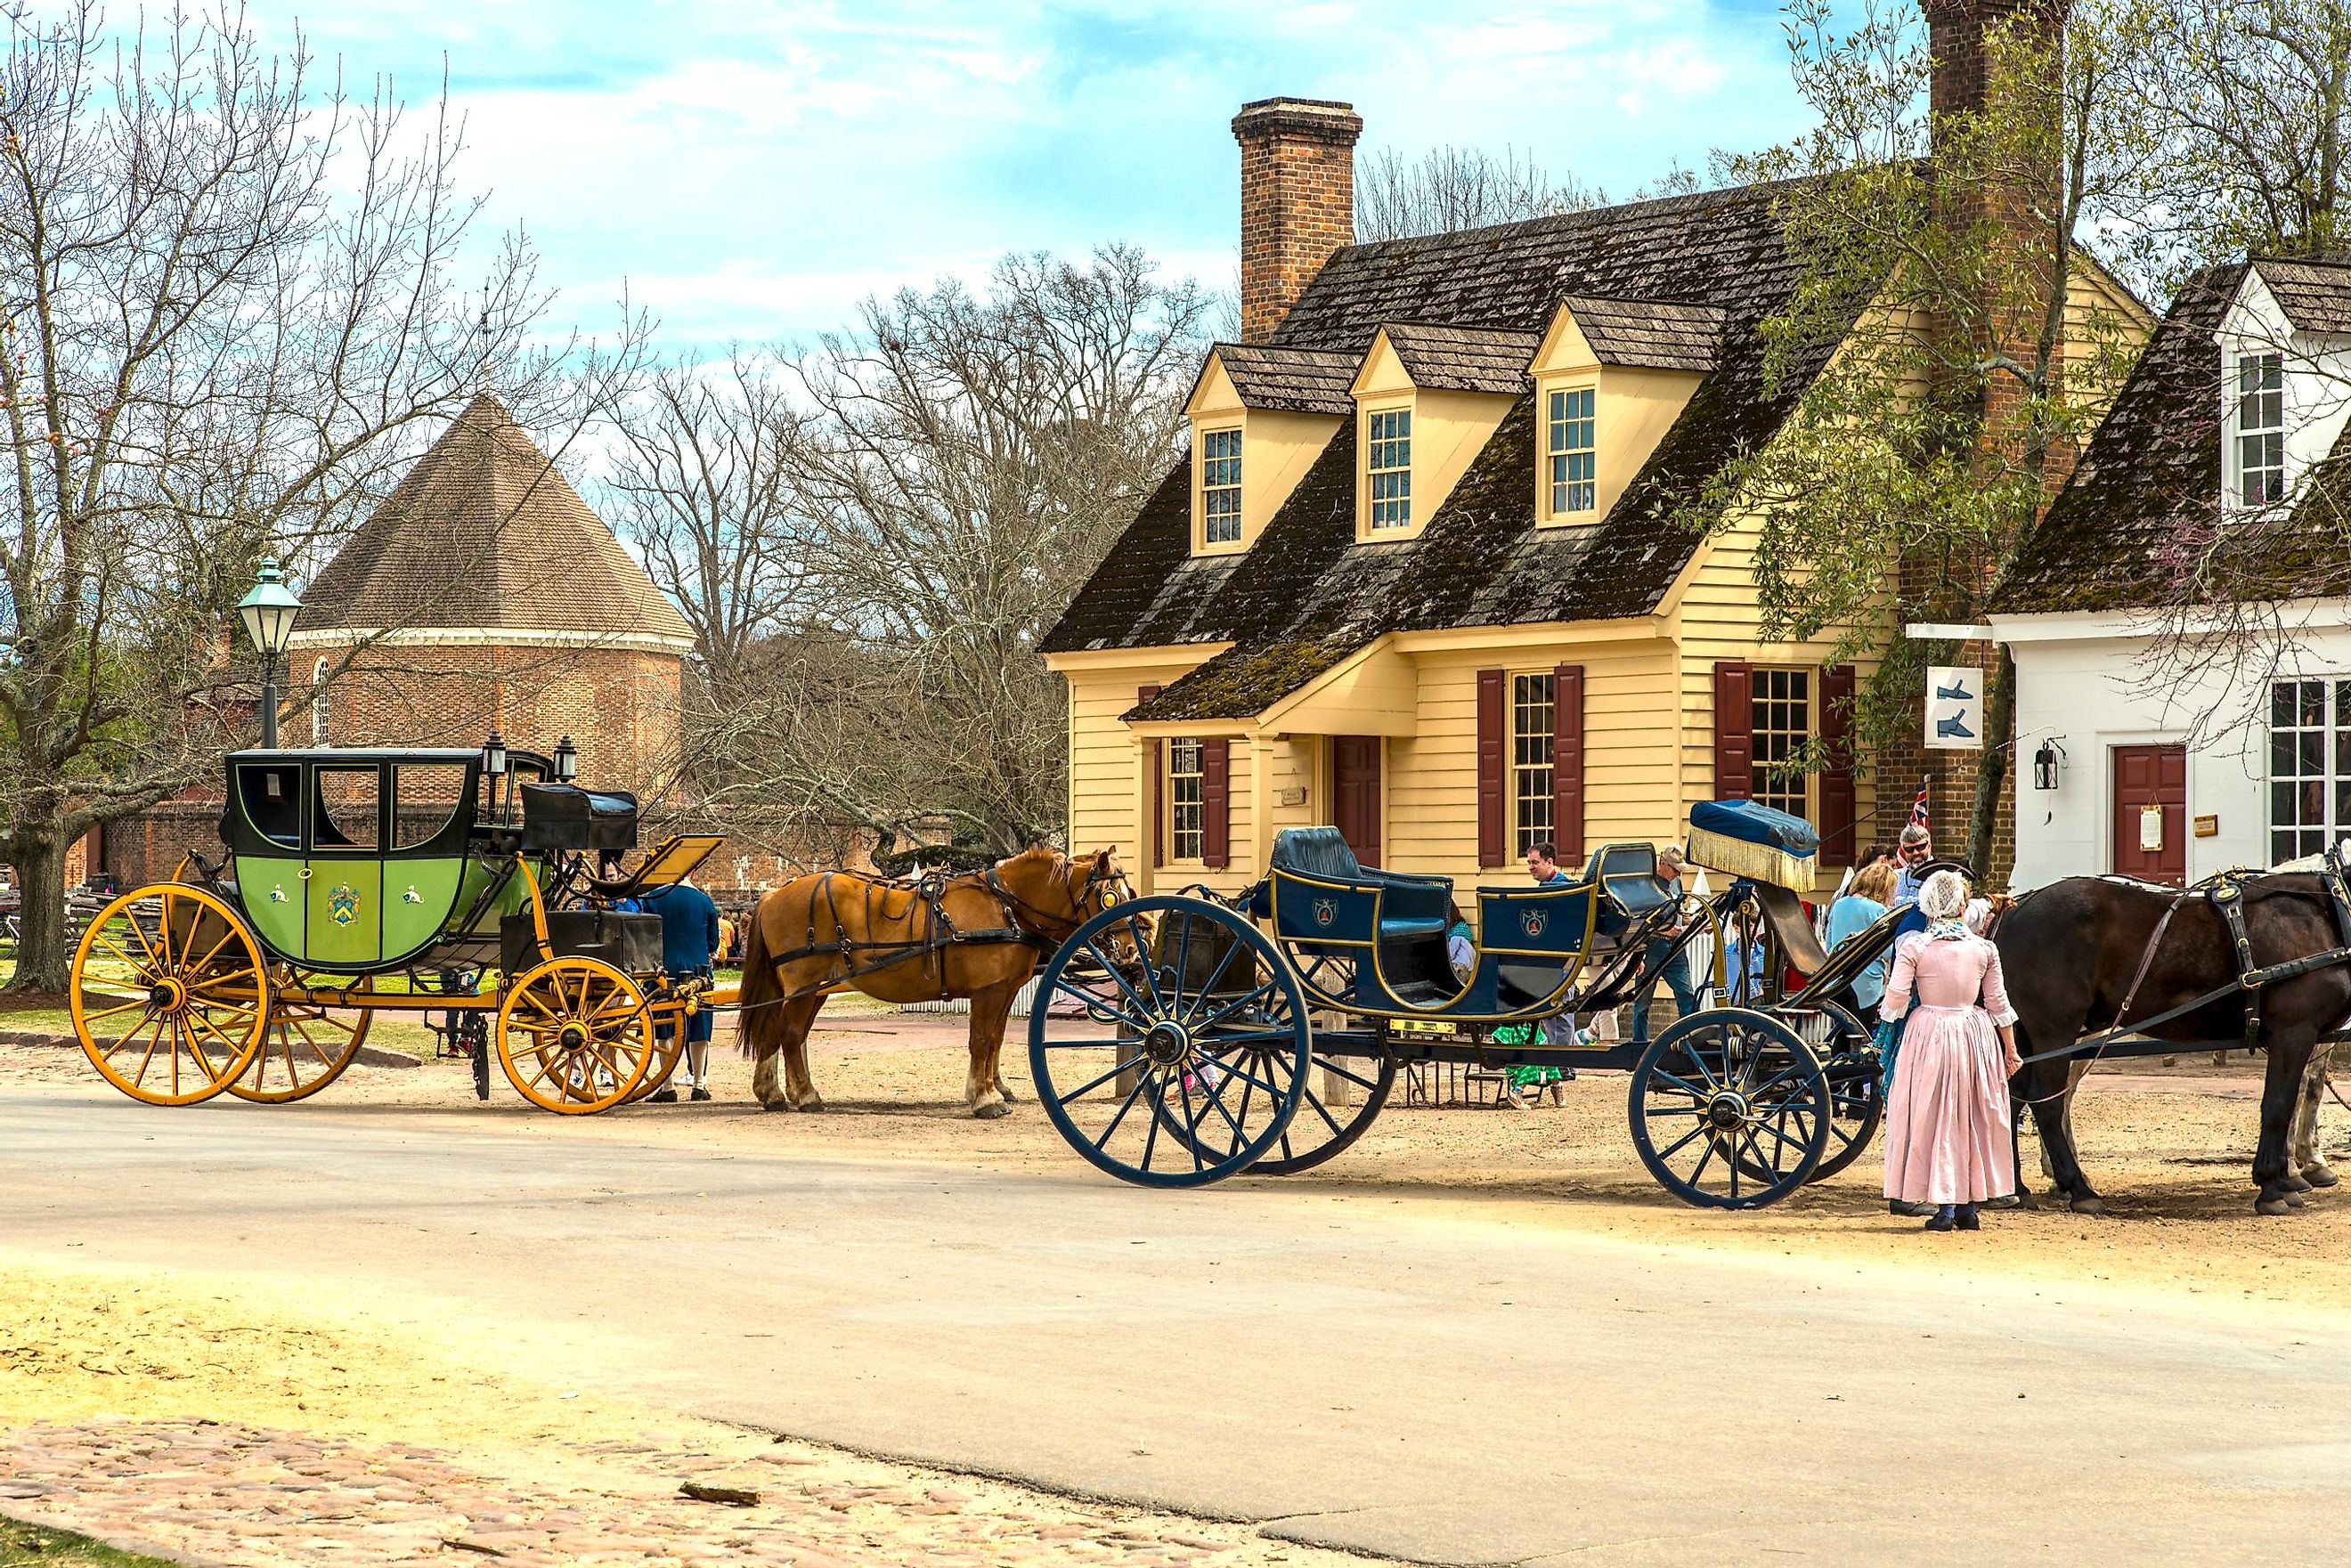  Horse drawn carriage tours in Williamsburg, Virginia. Editorial credit: Daniel Reiner / Shutterstock.com